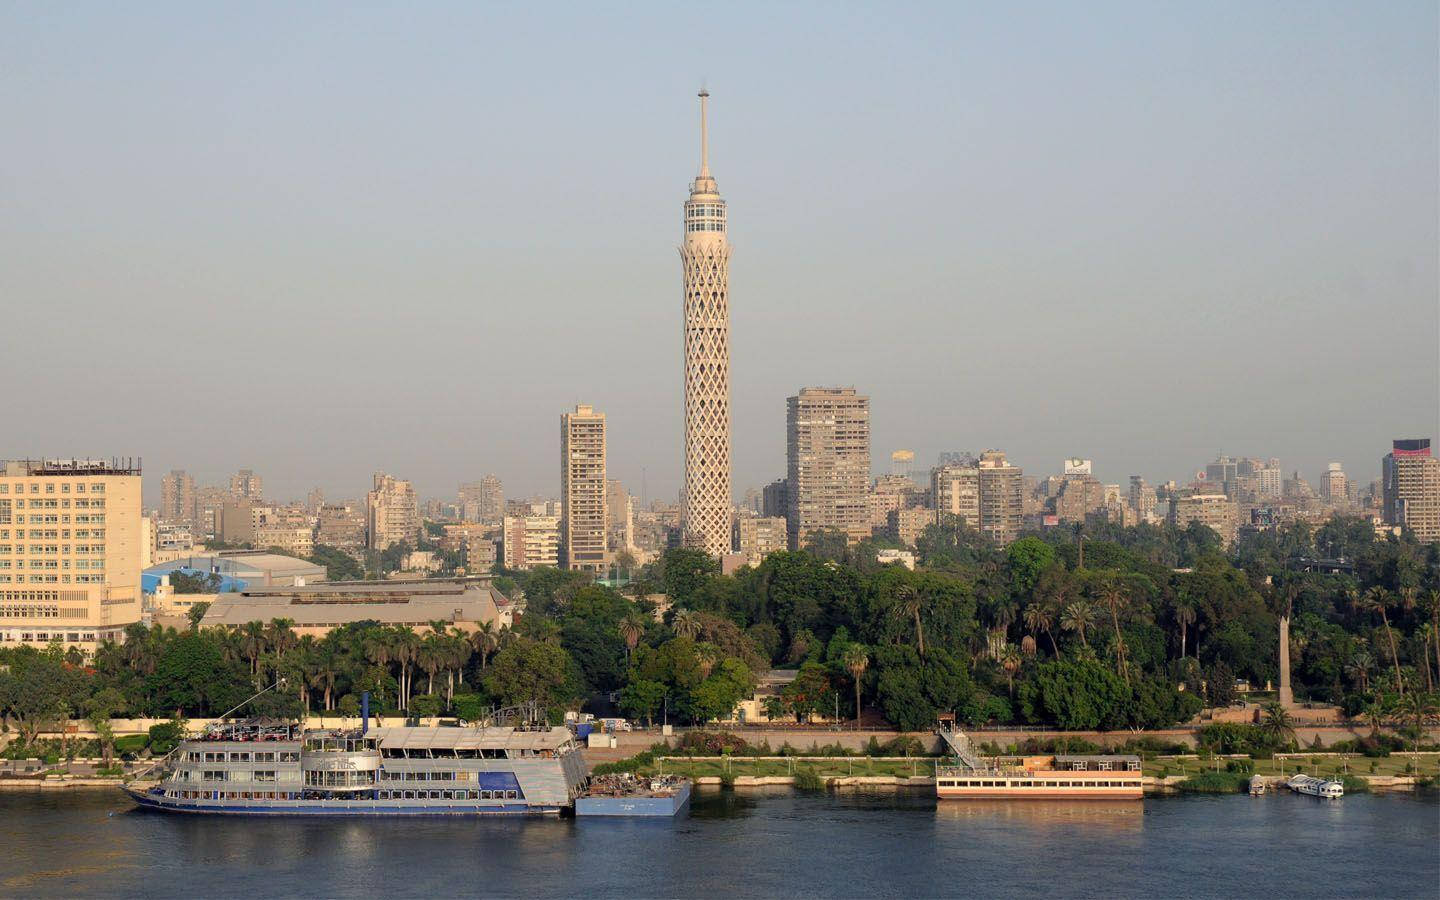 Cairoturm Mit Boot Auf Dem Blauen Nil Wallpaper